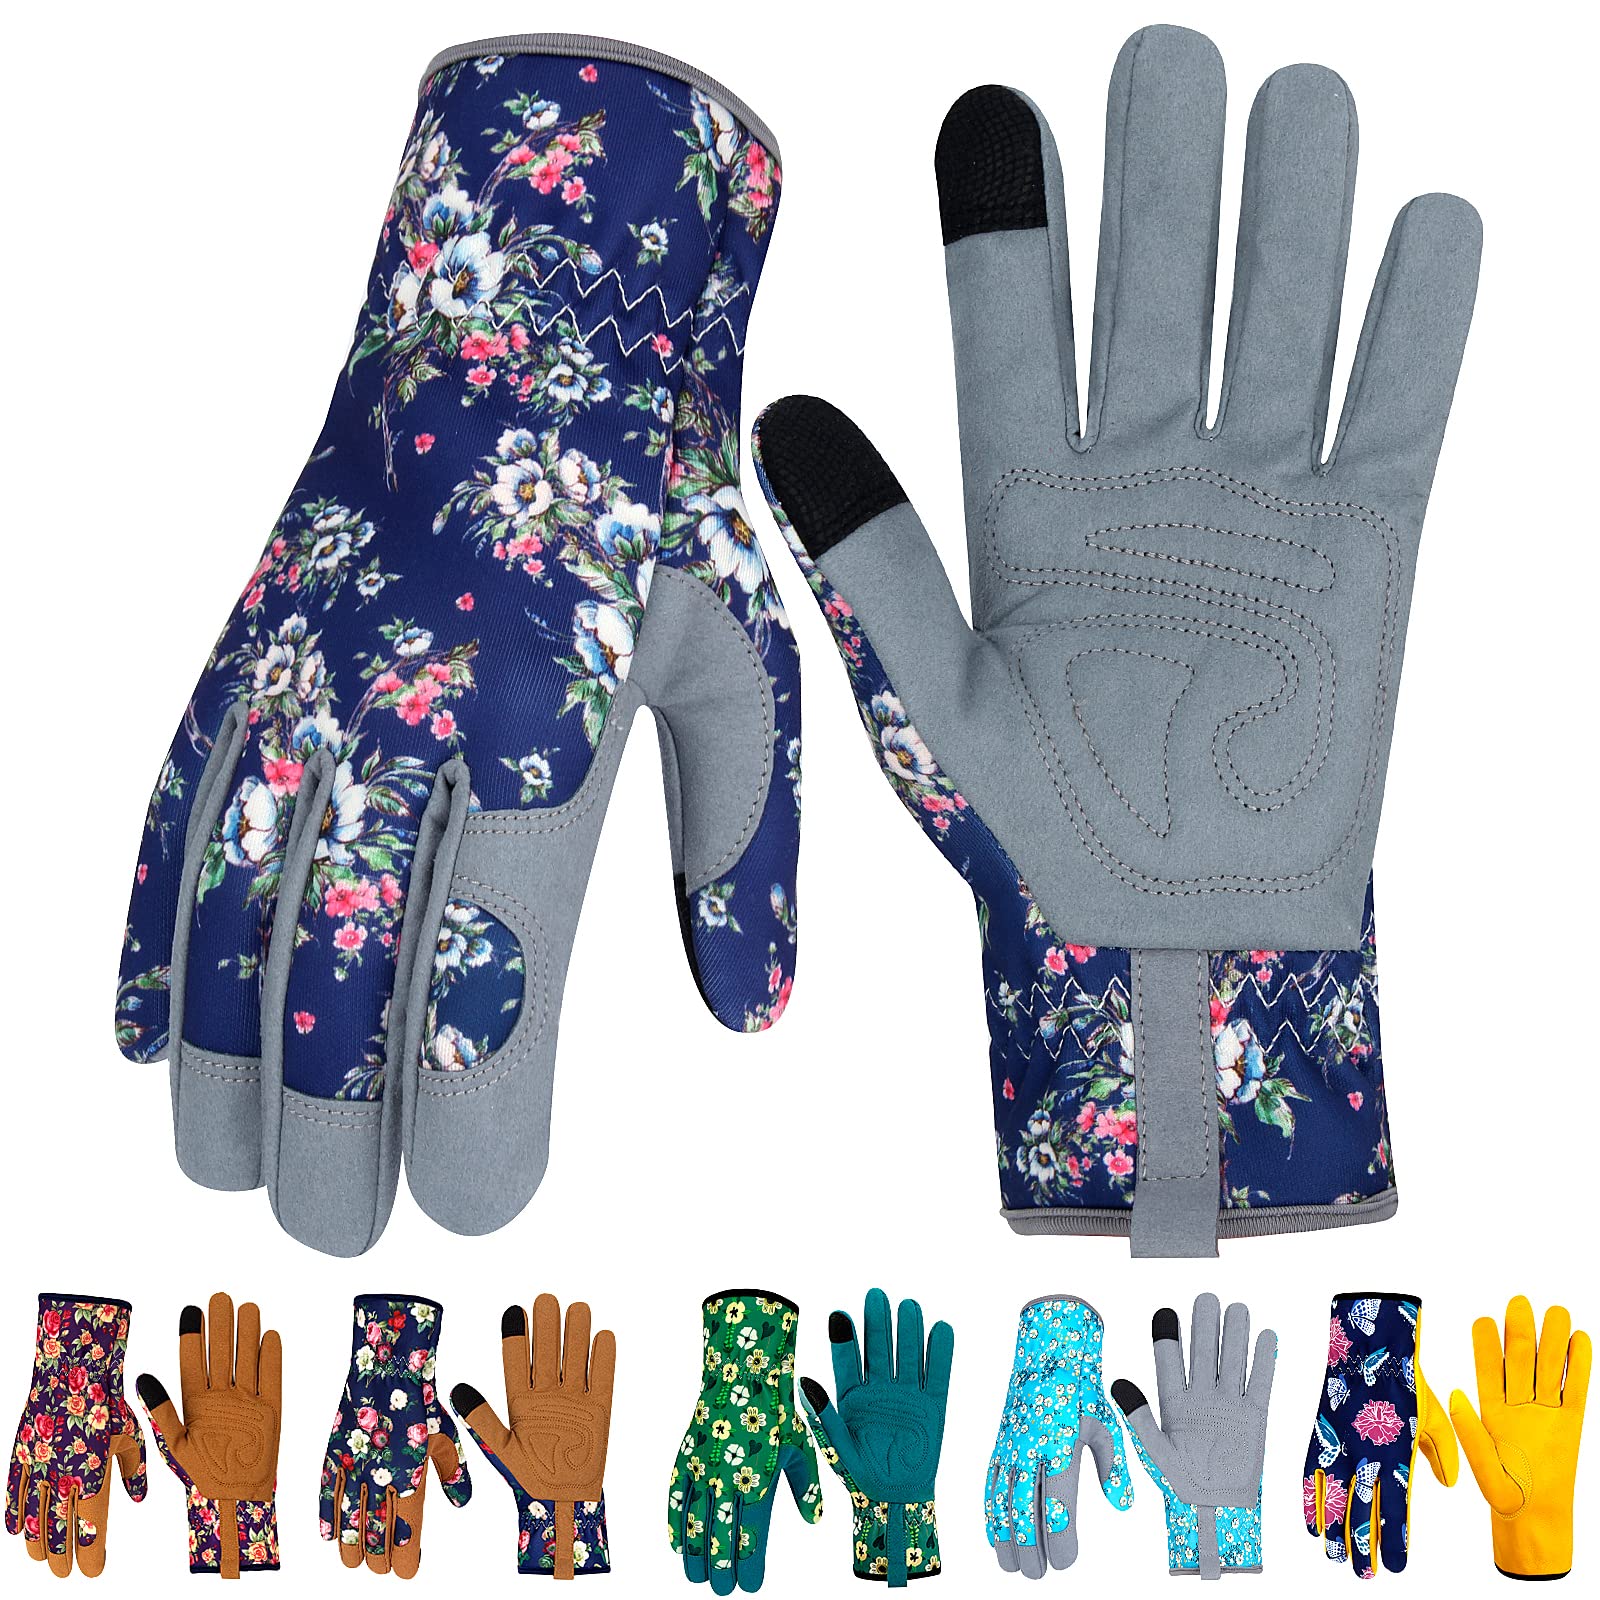 MERTURN Leather Gardening Gloves for Women Thorn Proof Garden Gloves Touch Screen Working Gloves Gardening Gifts Blue